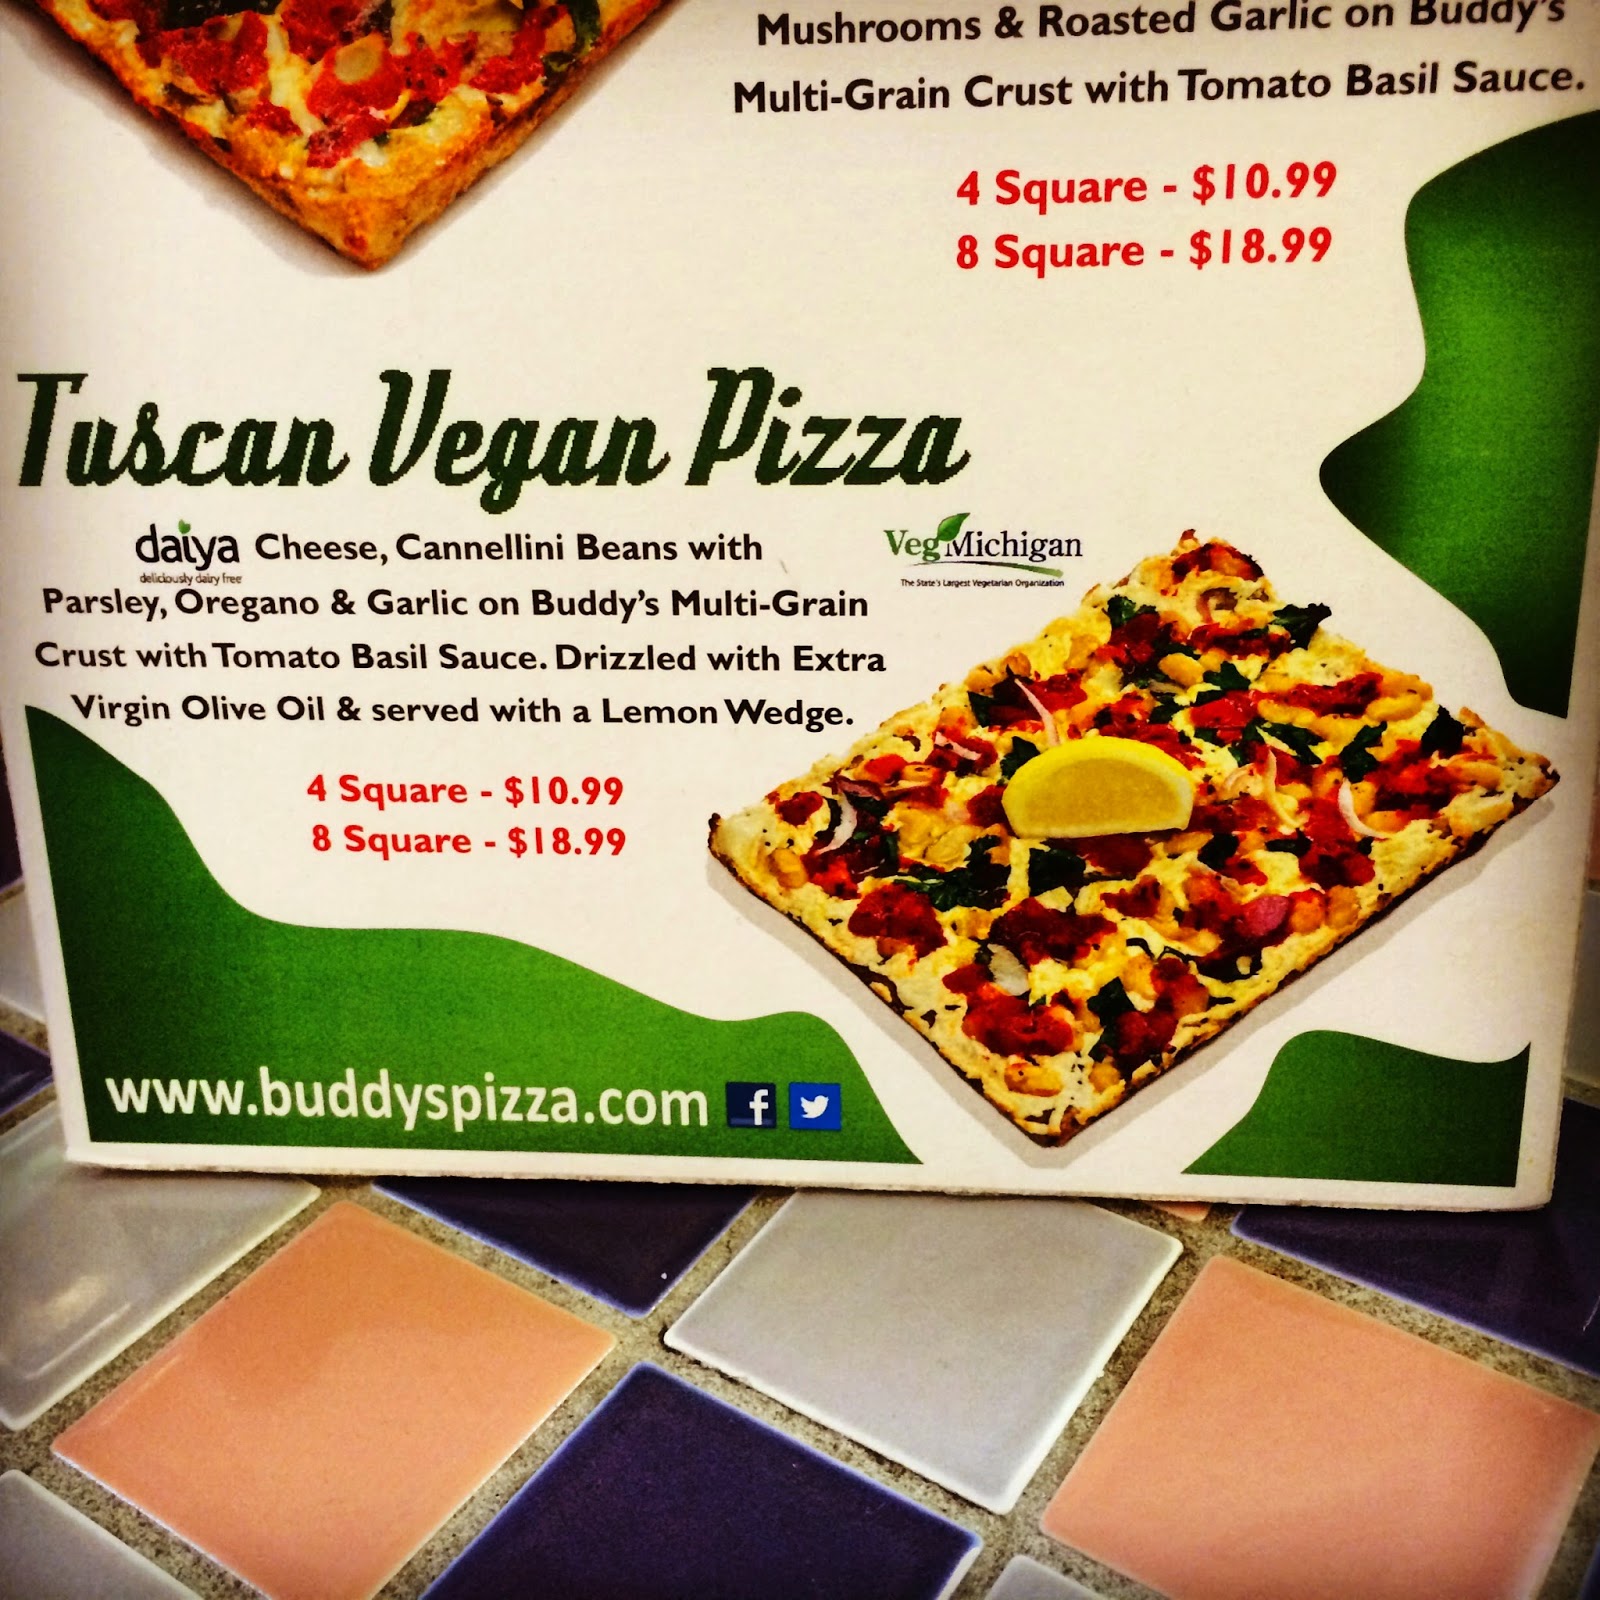 Buddy's Tuscan Vegan Pizza Vegetarian Detroit